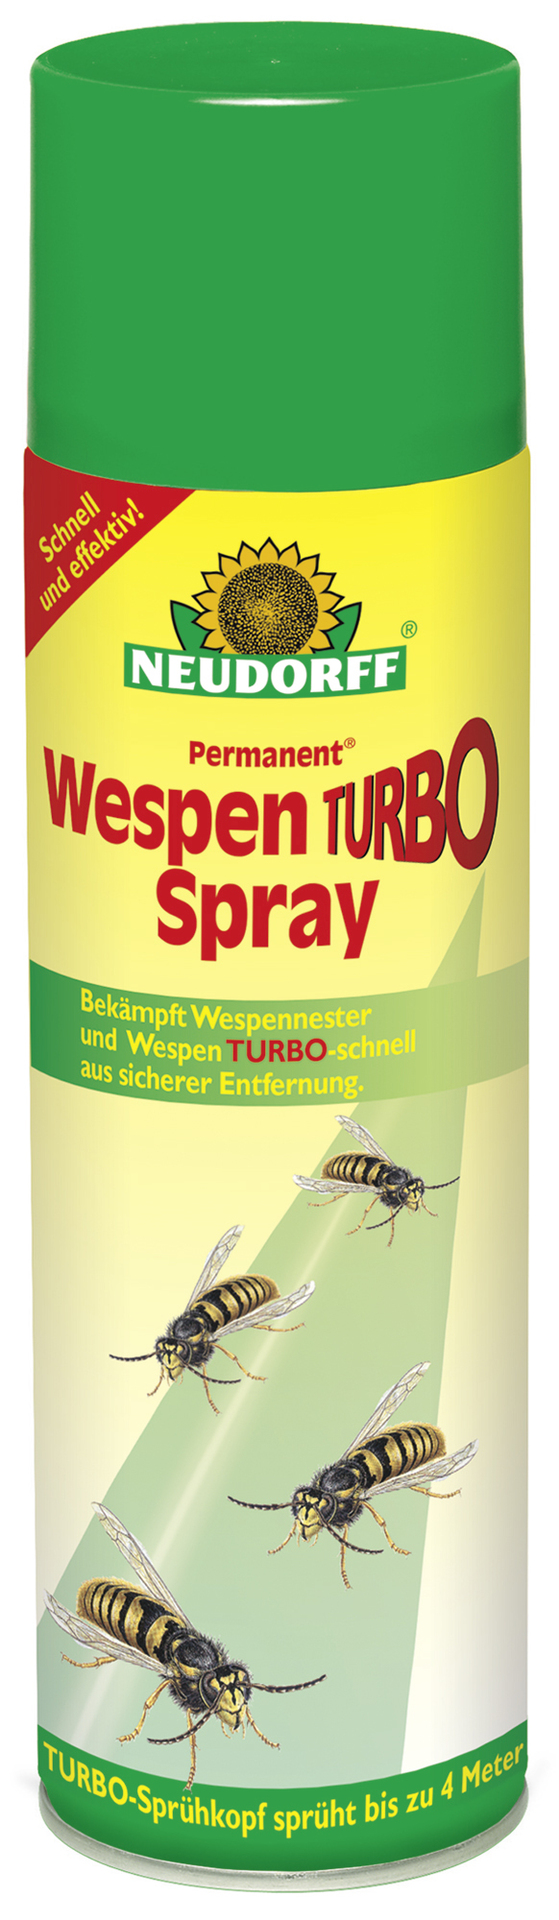 W. Neudorff GmbH KG Permanent Wespen Turbospray